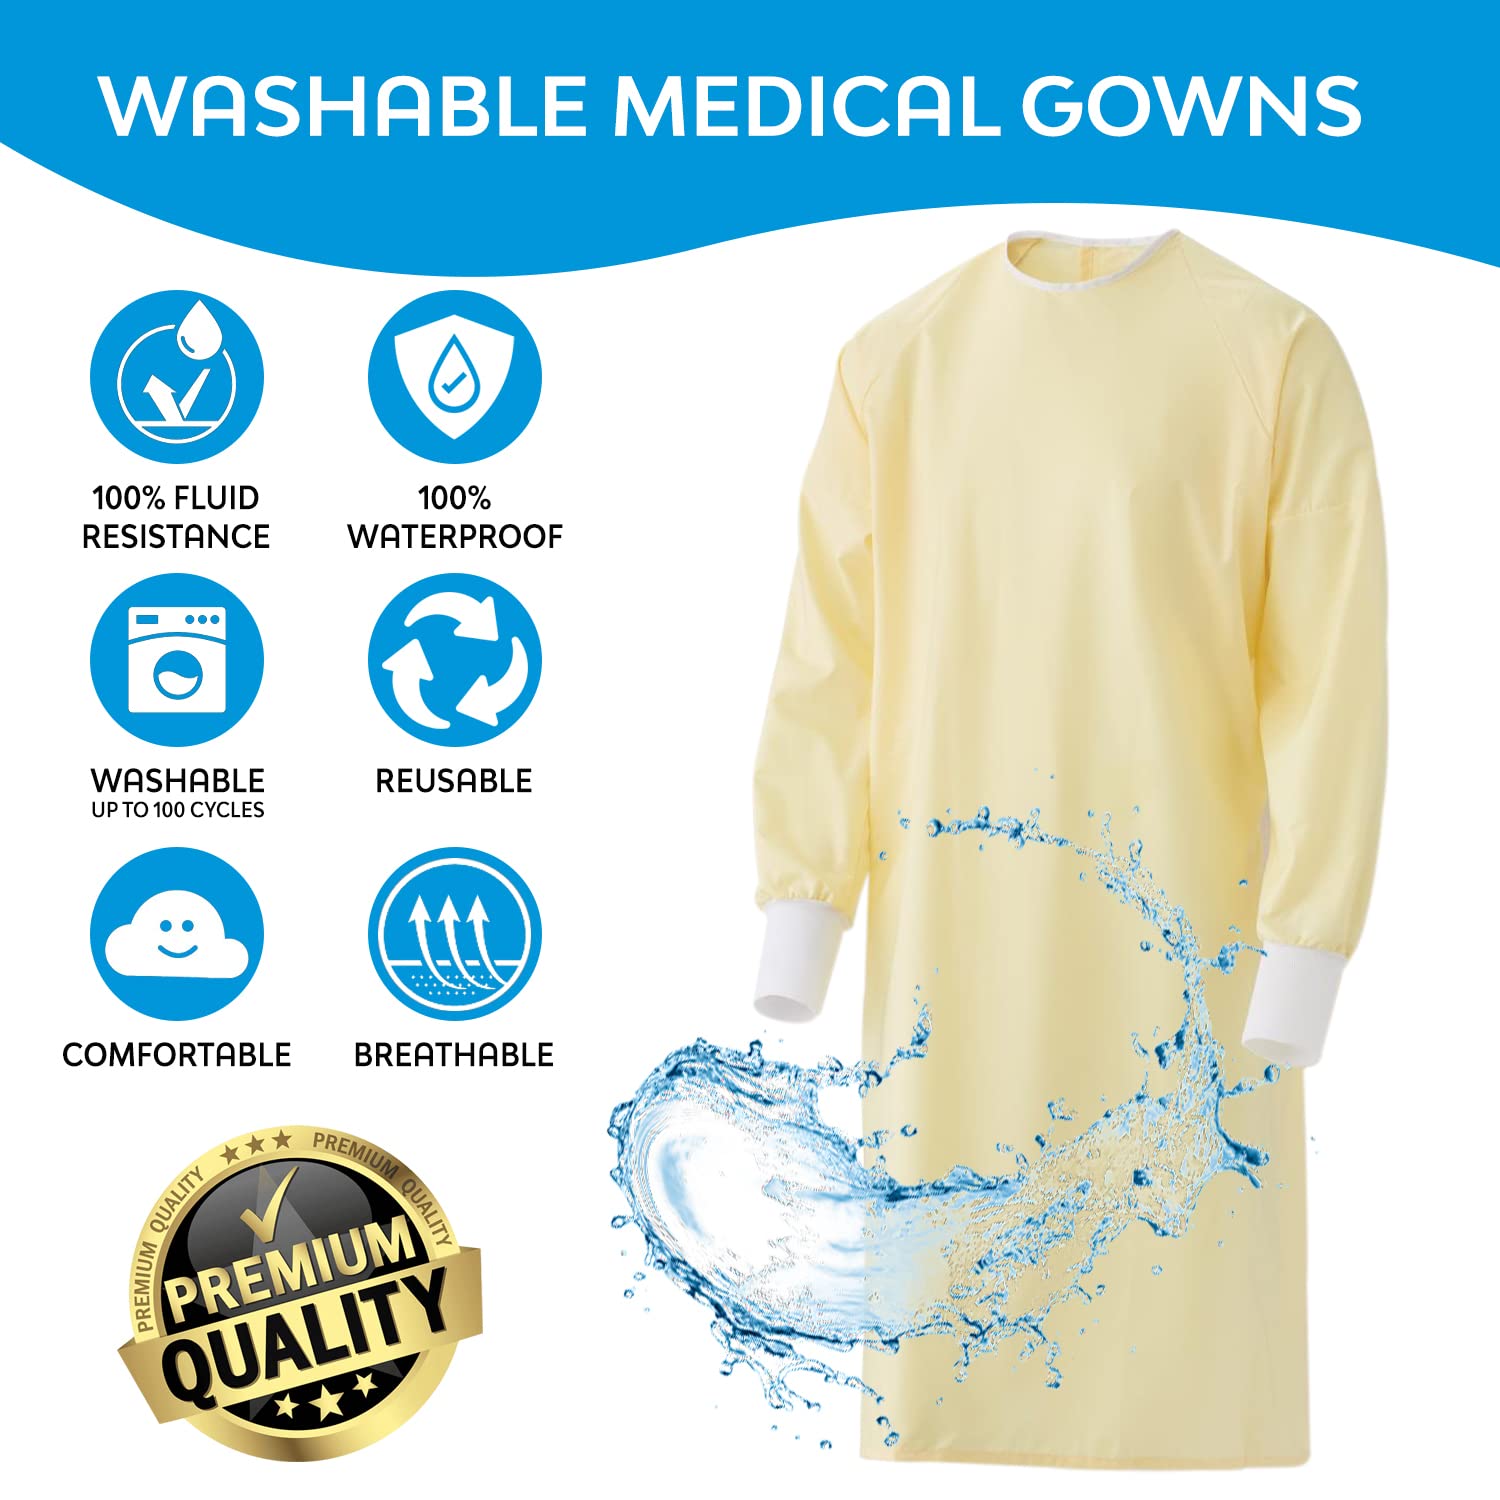 Reusable Gowns - Merrow Medical